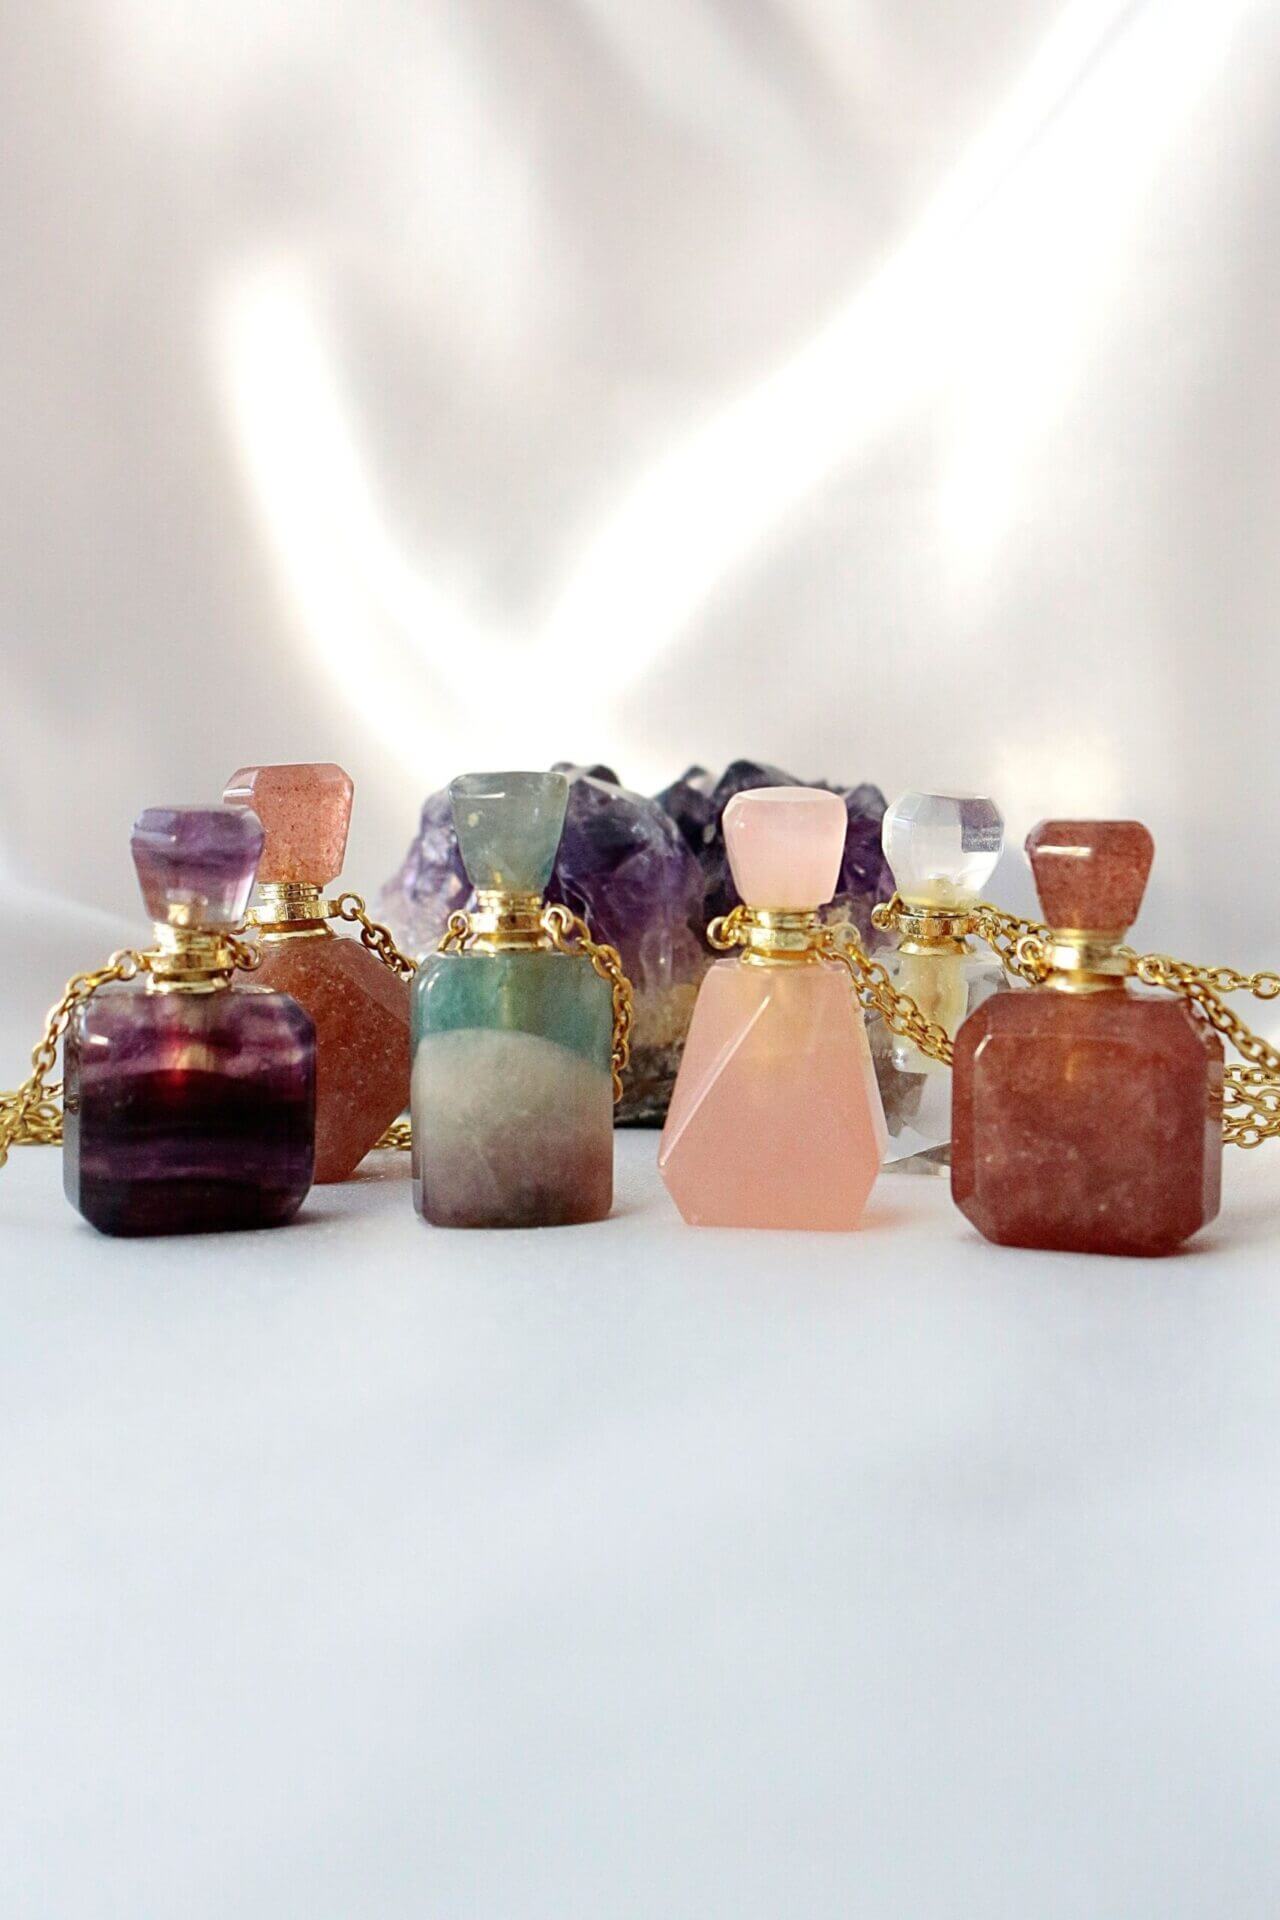 24 karat healing crystals bottles necklace